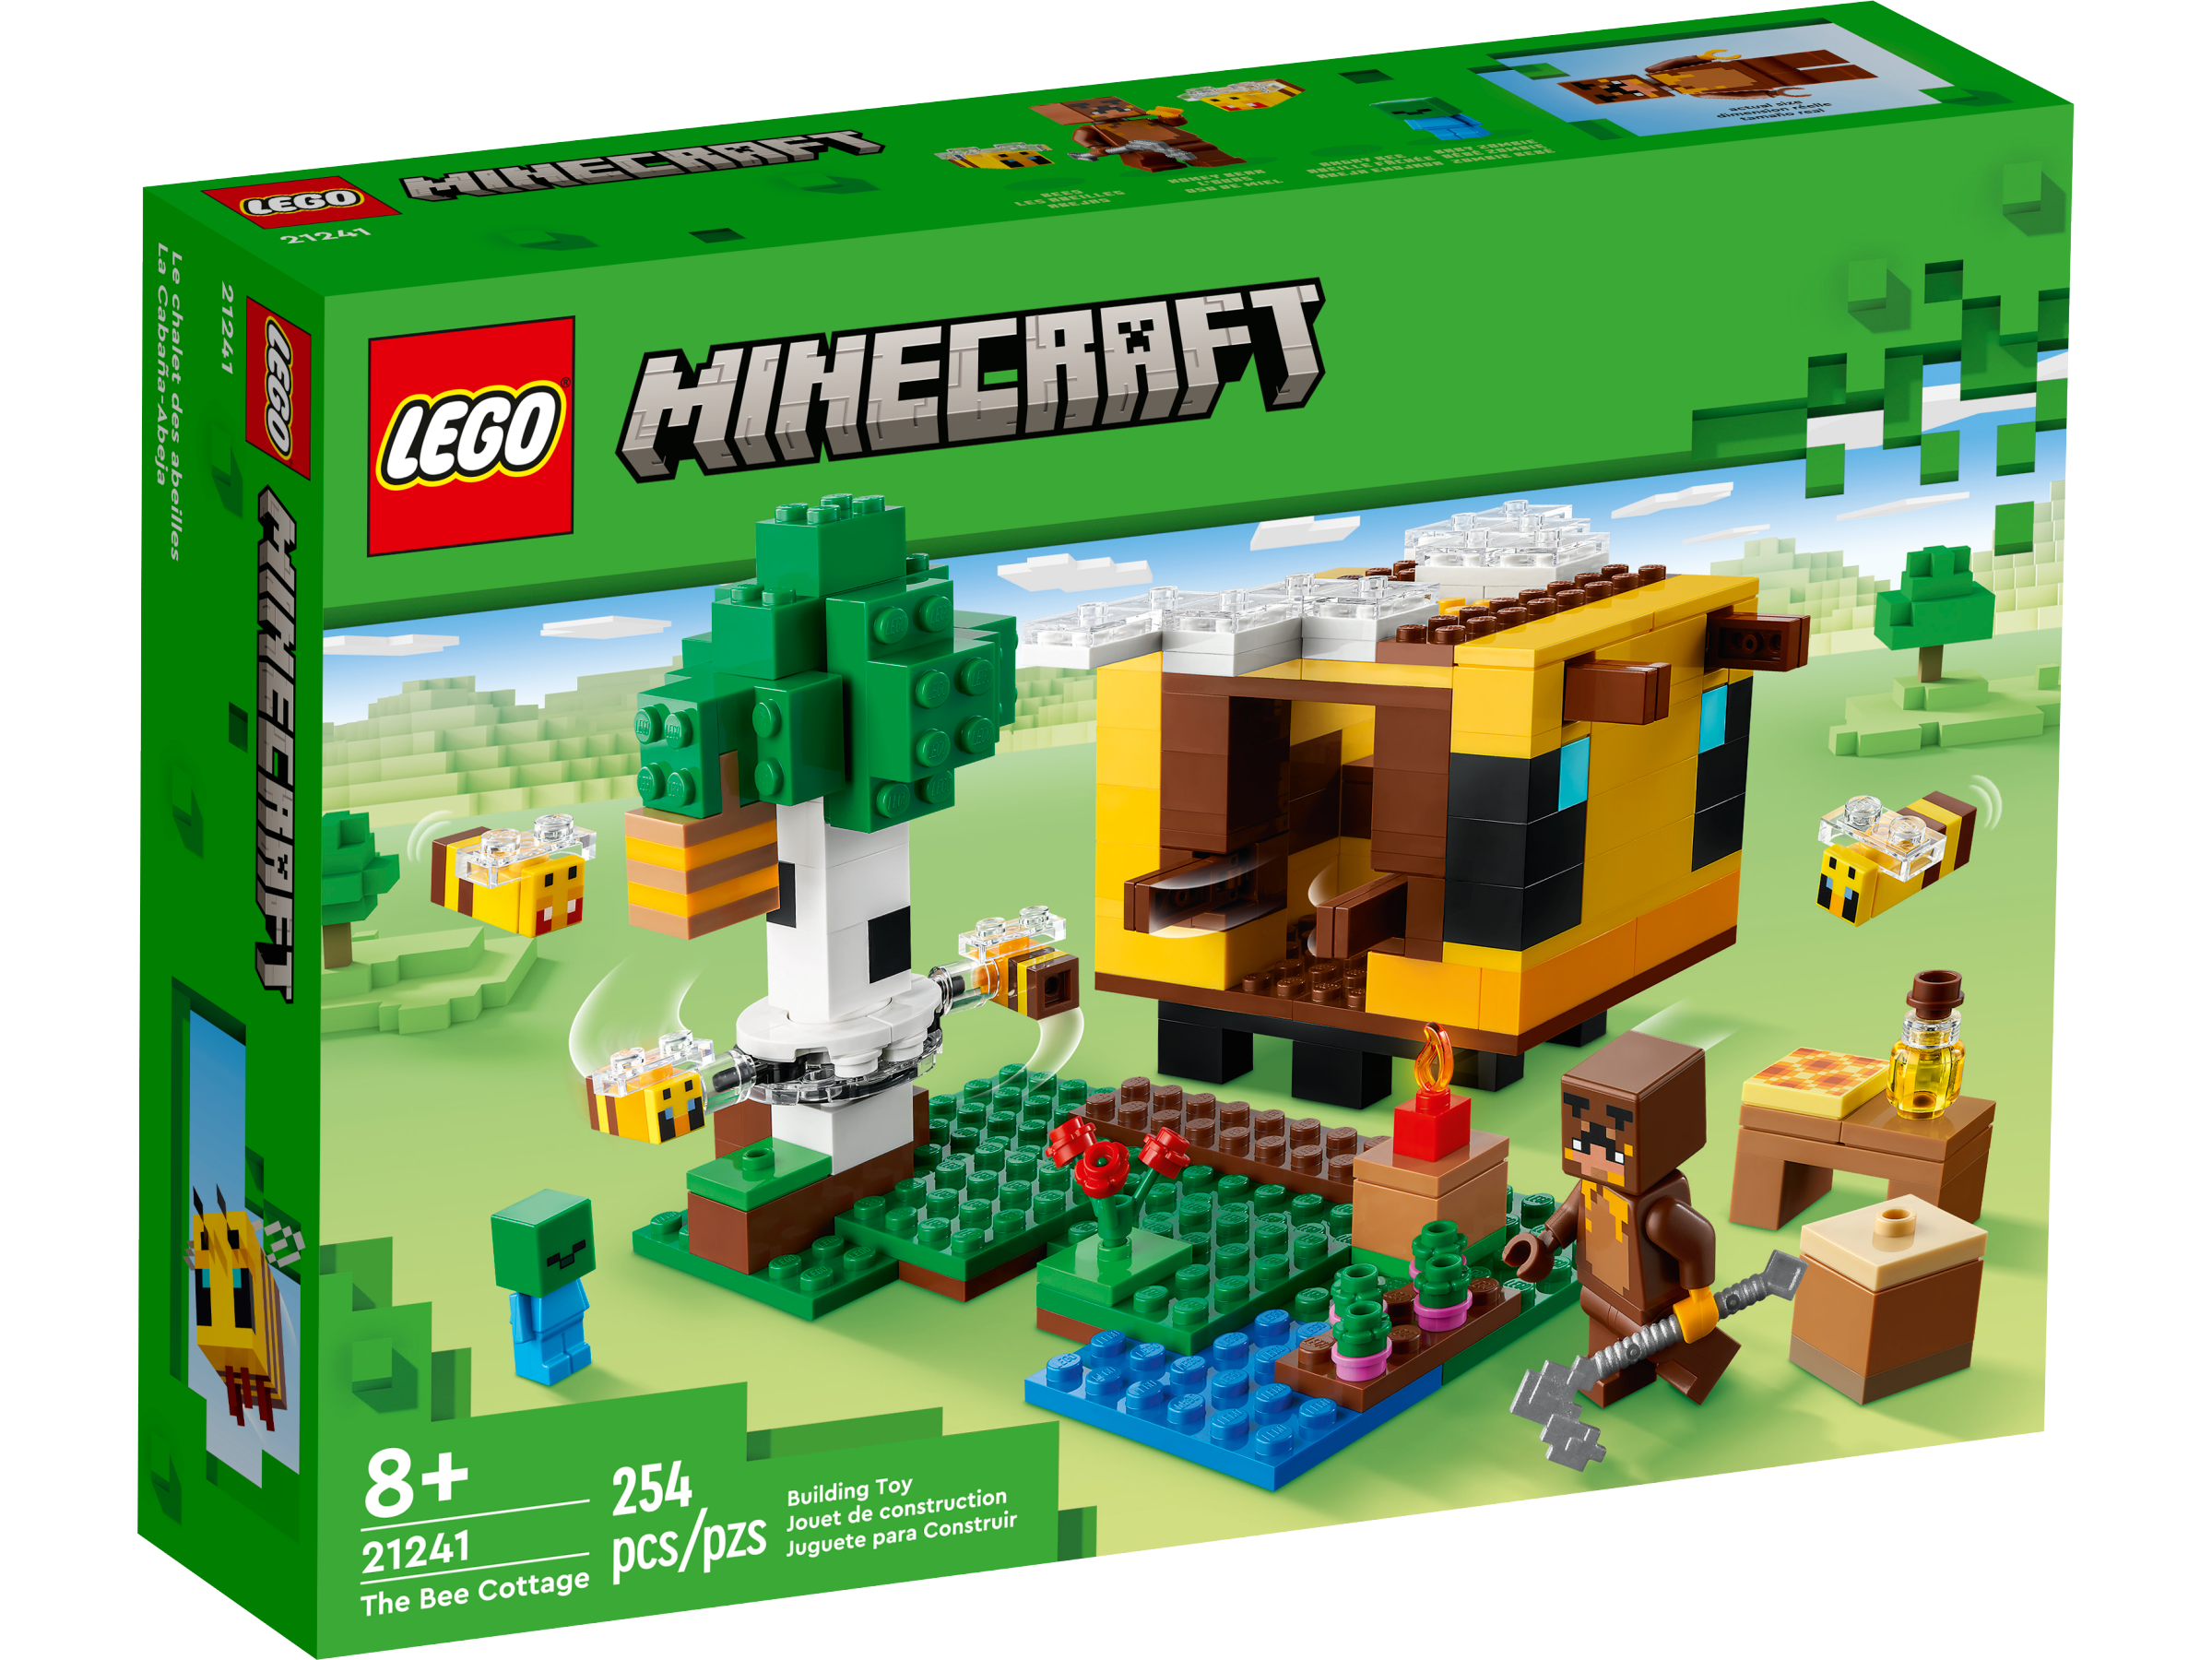 minecraft lego house